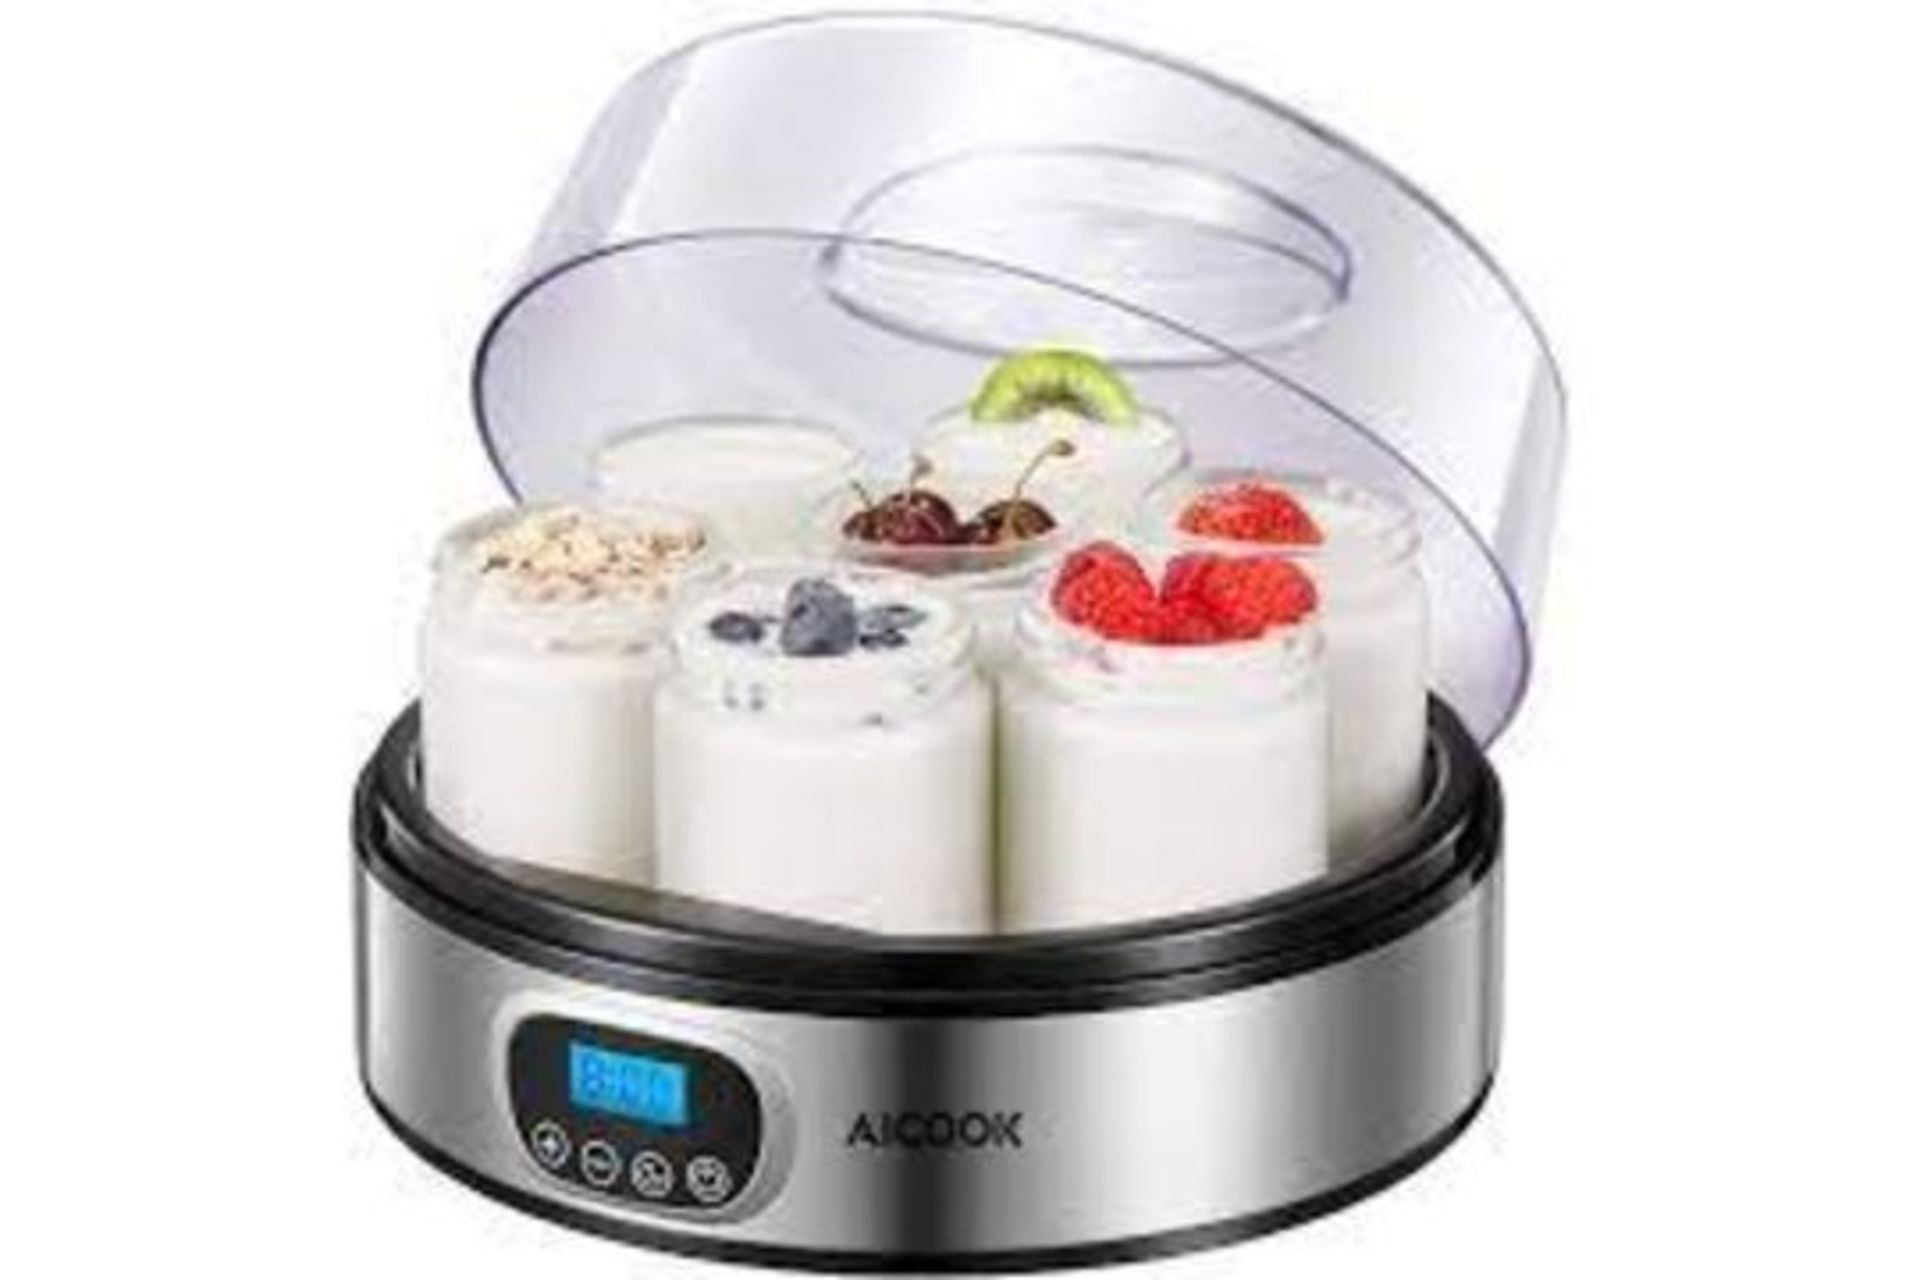 TRADE LOT 10 x NEW BOXED AICOOK Automatic Digital Yogurt Maker, Timer Control & LCD Display, 304